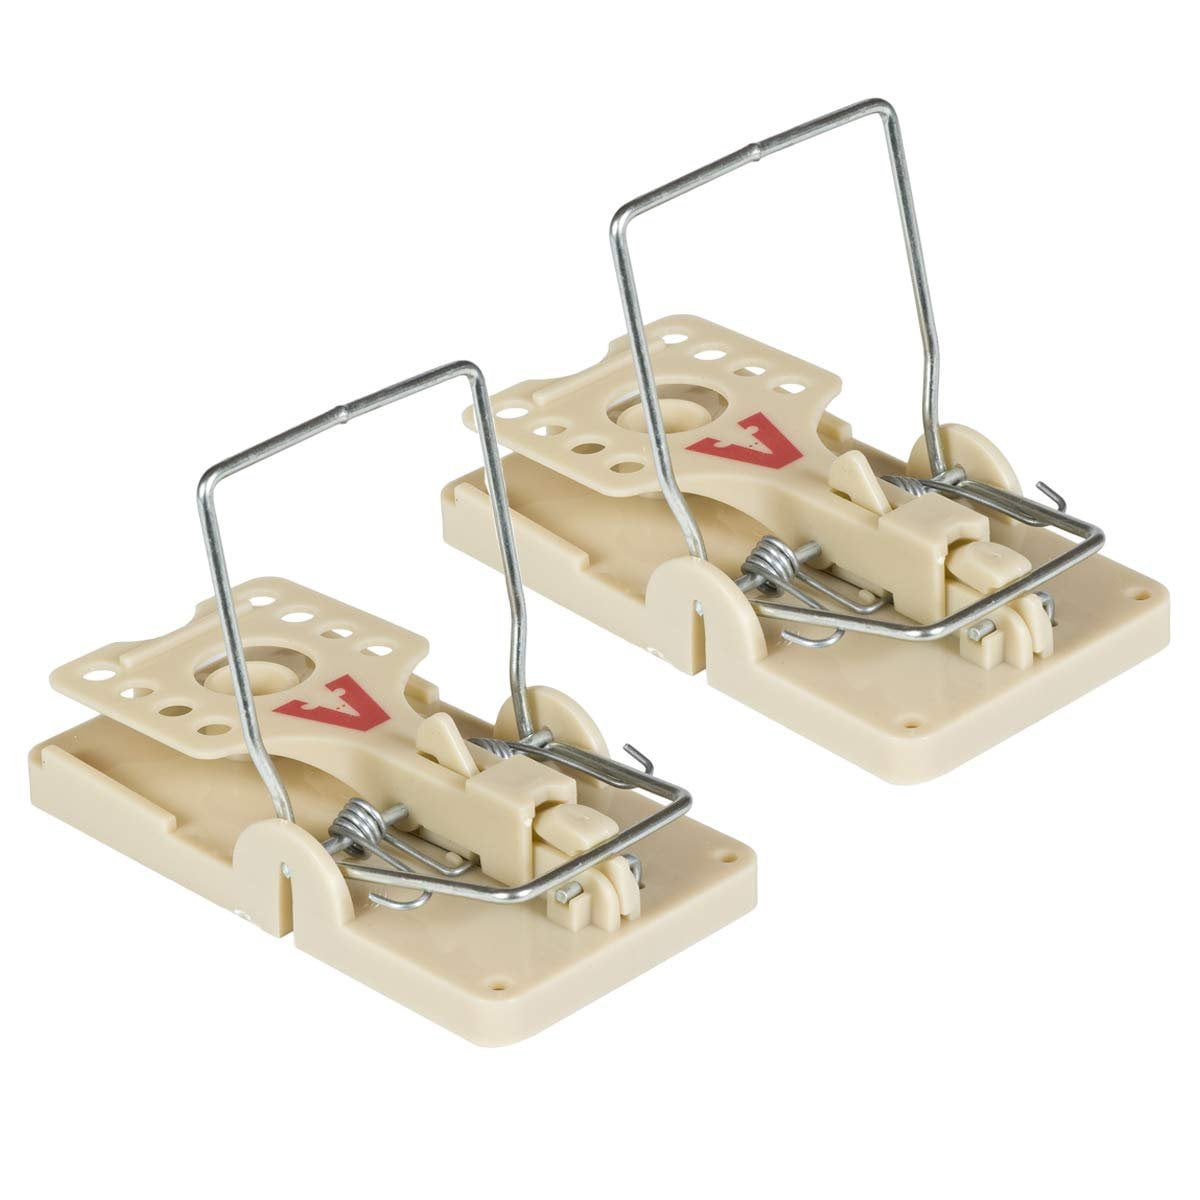 Farm Pro Plastic Mouse Traps, 2 Pack - 85014 | Rural King